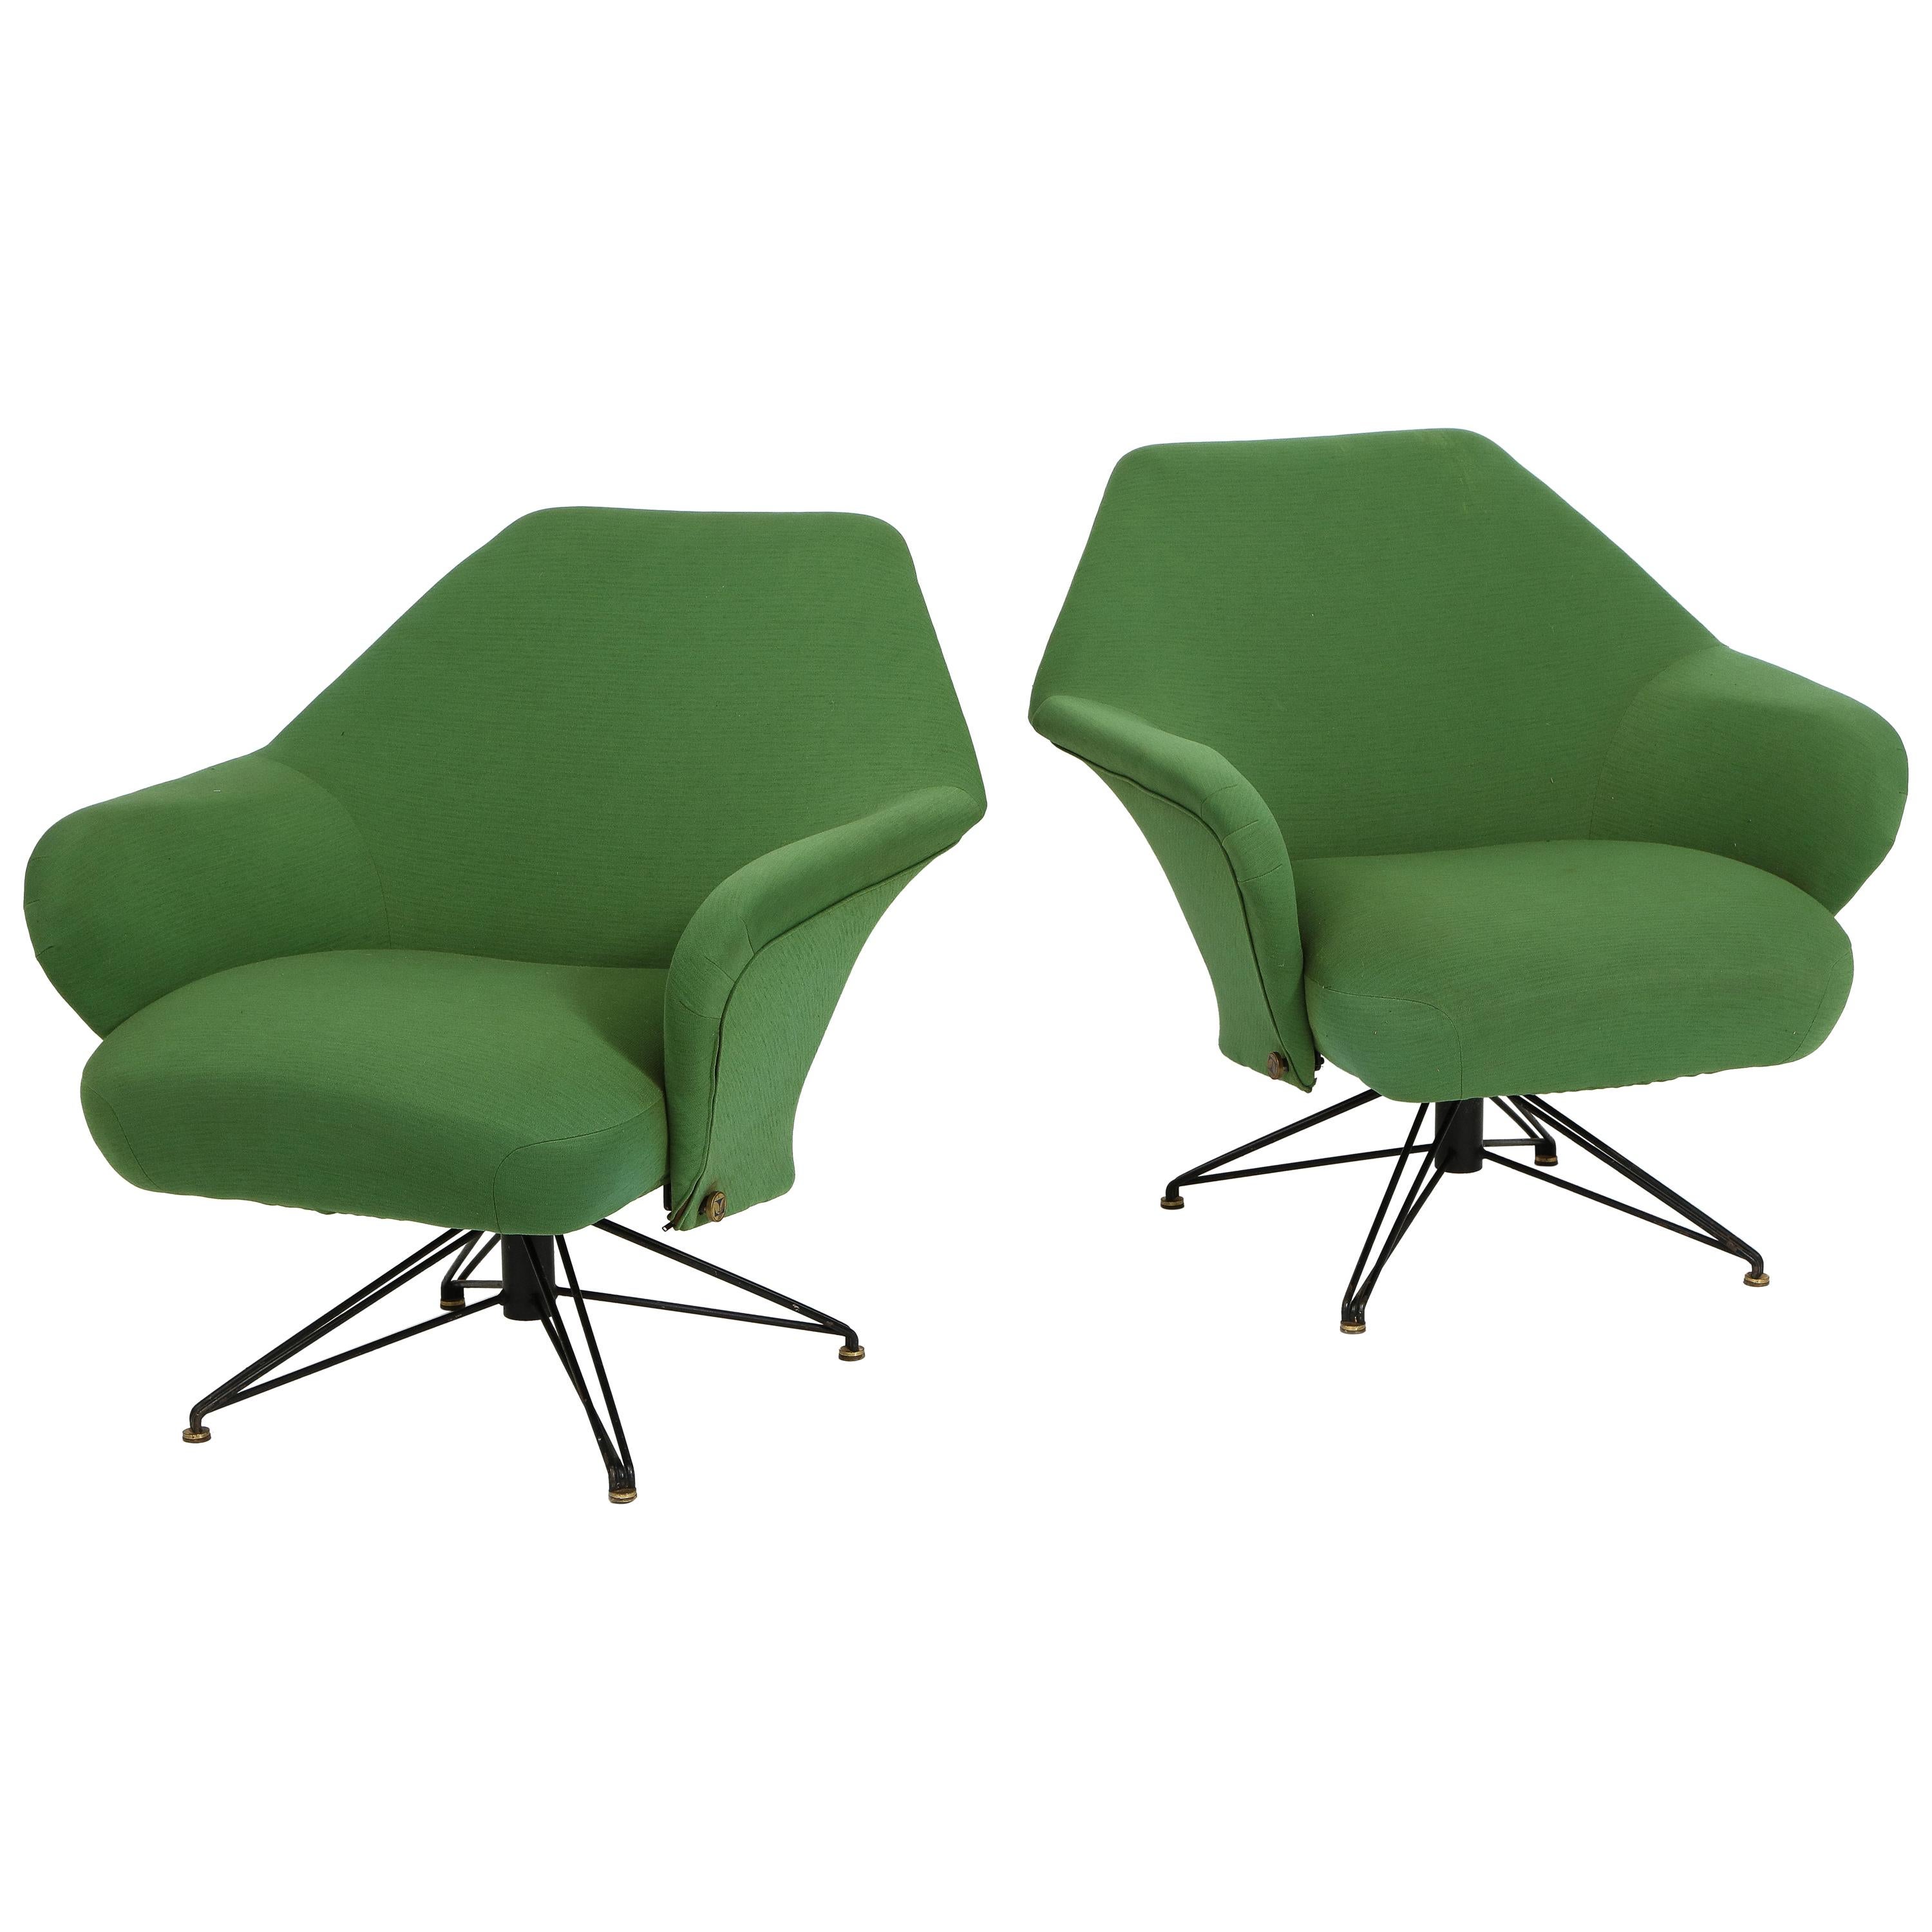 Osvaldo Borsani Pair of Green P32 Chairs for Tecno, Italy 1950s